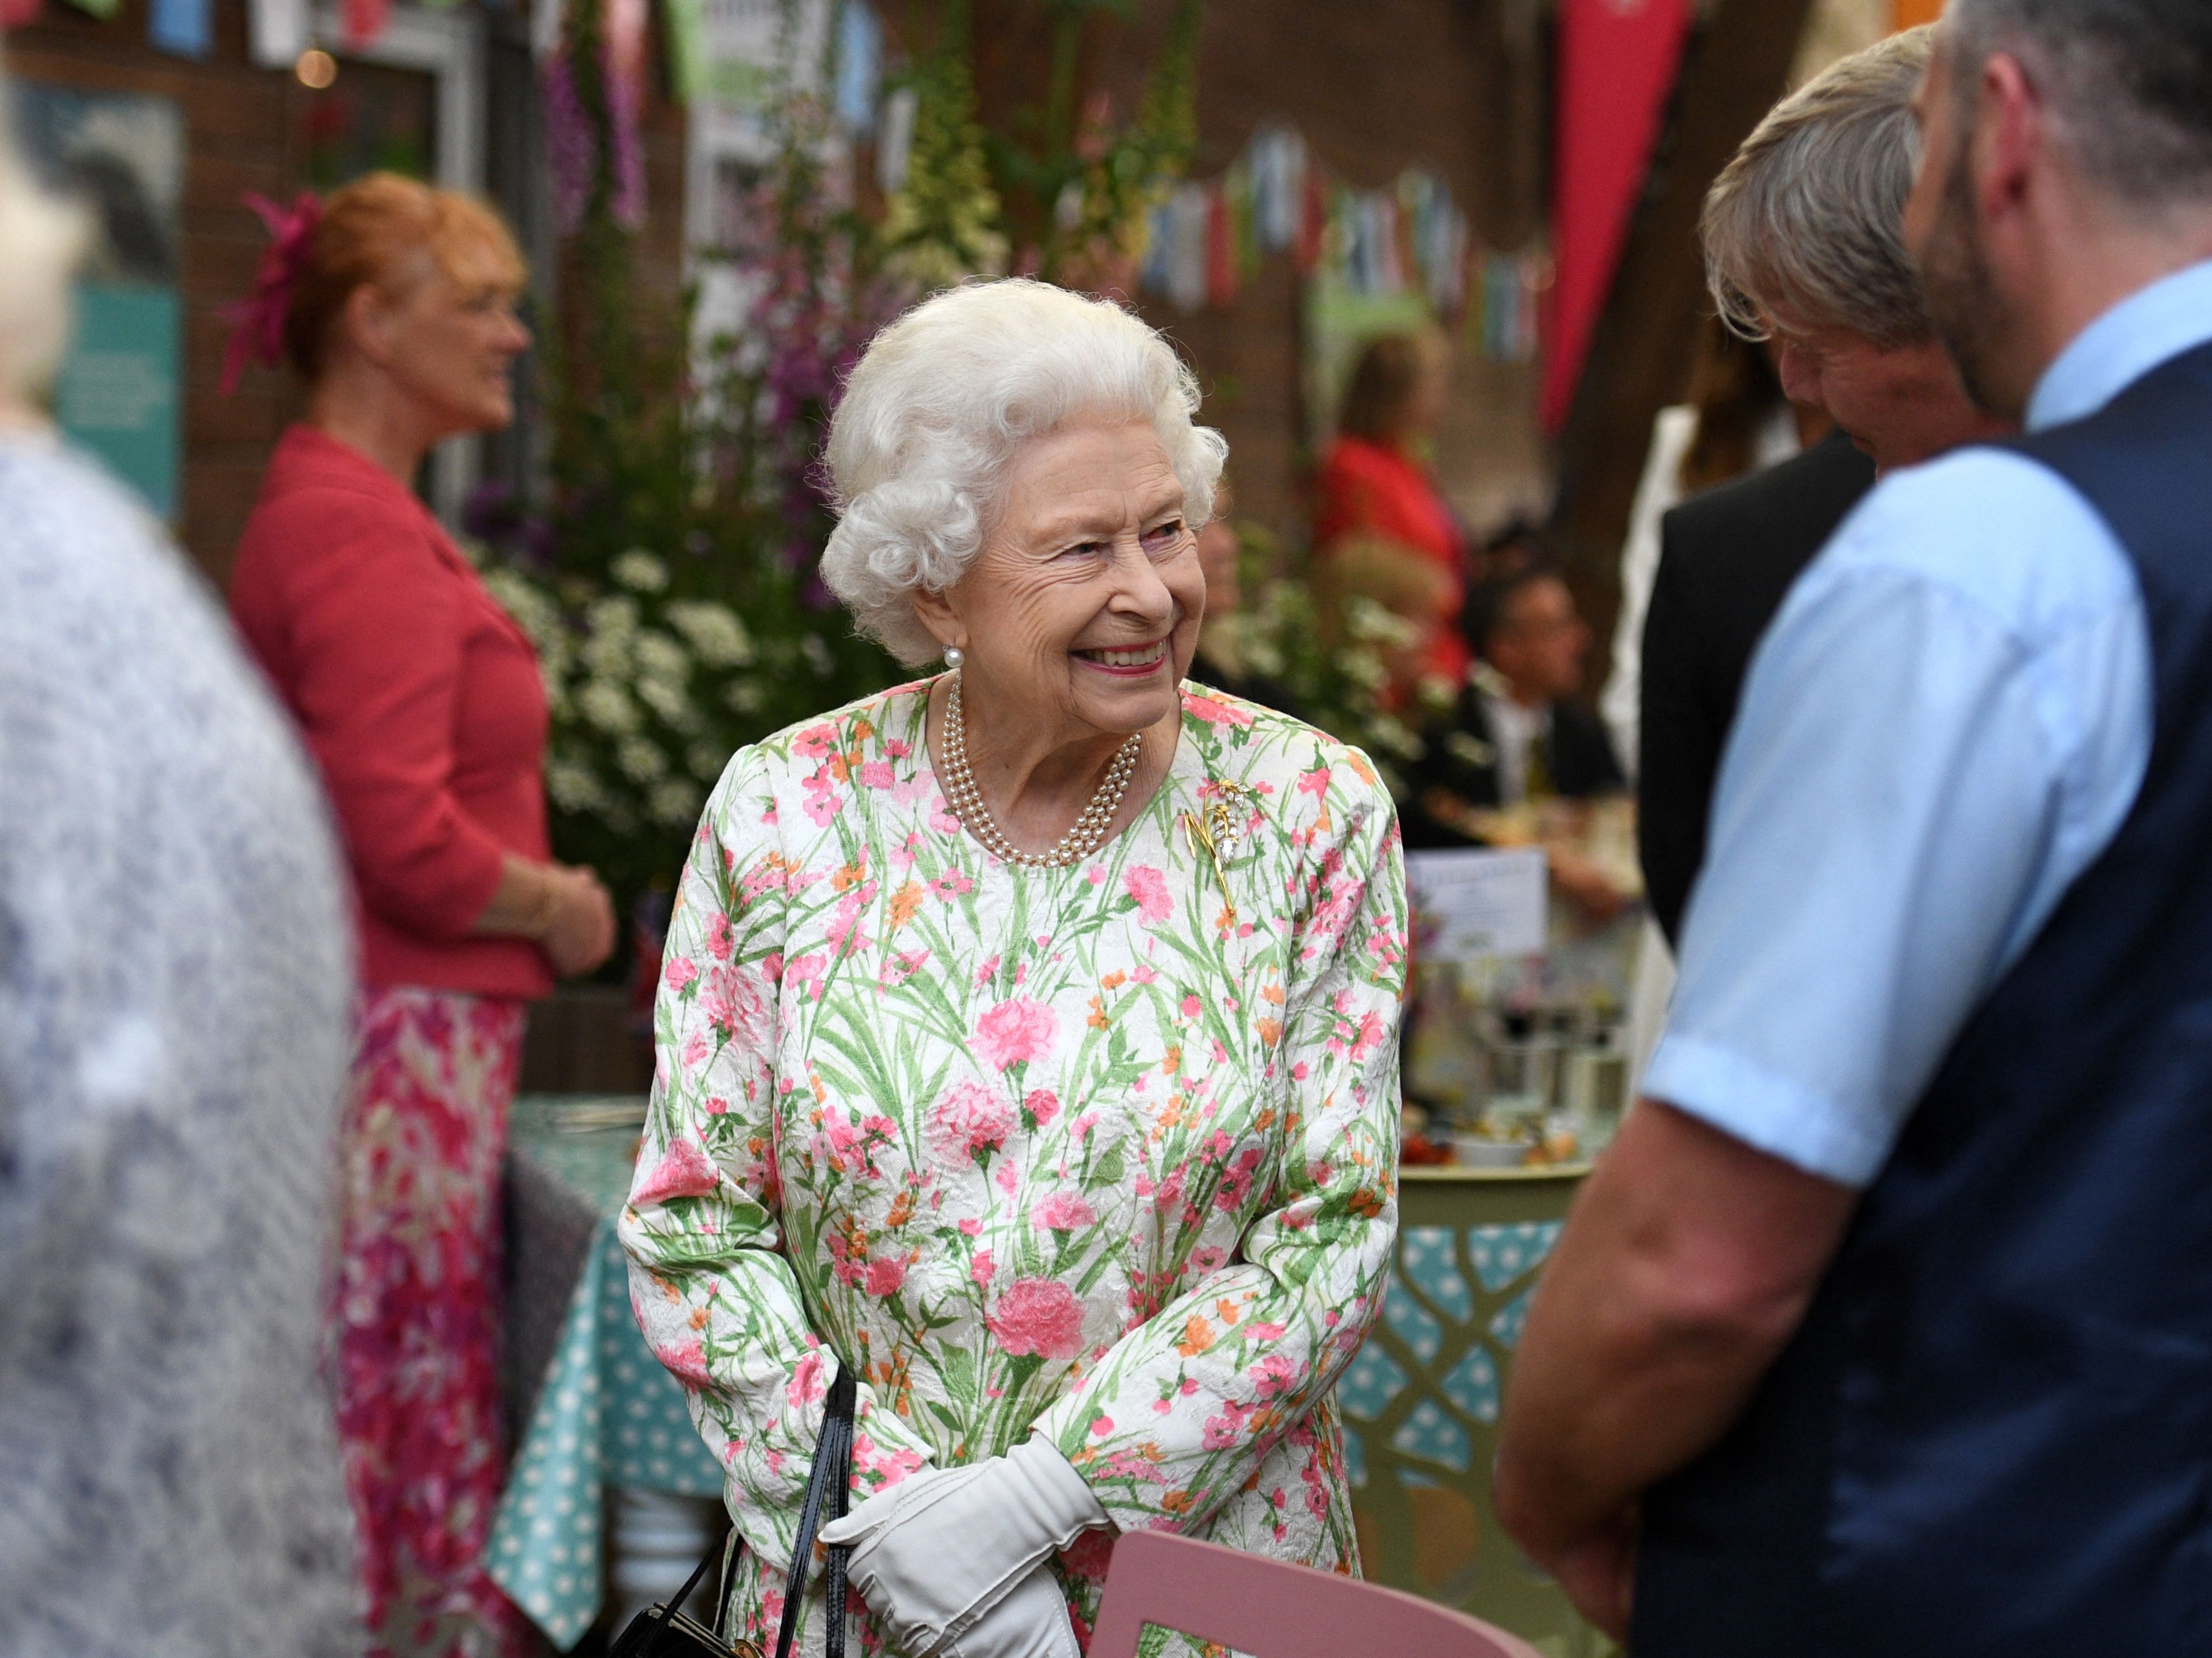 Queen Elizabeth II smiles as she meets people from communities across Cornwall